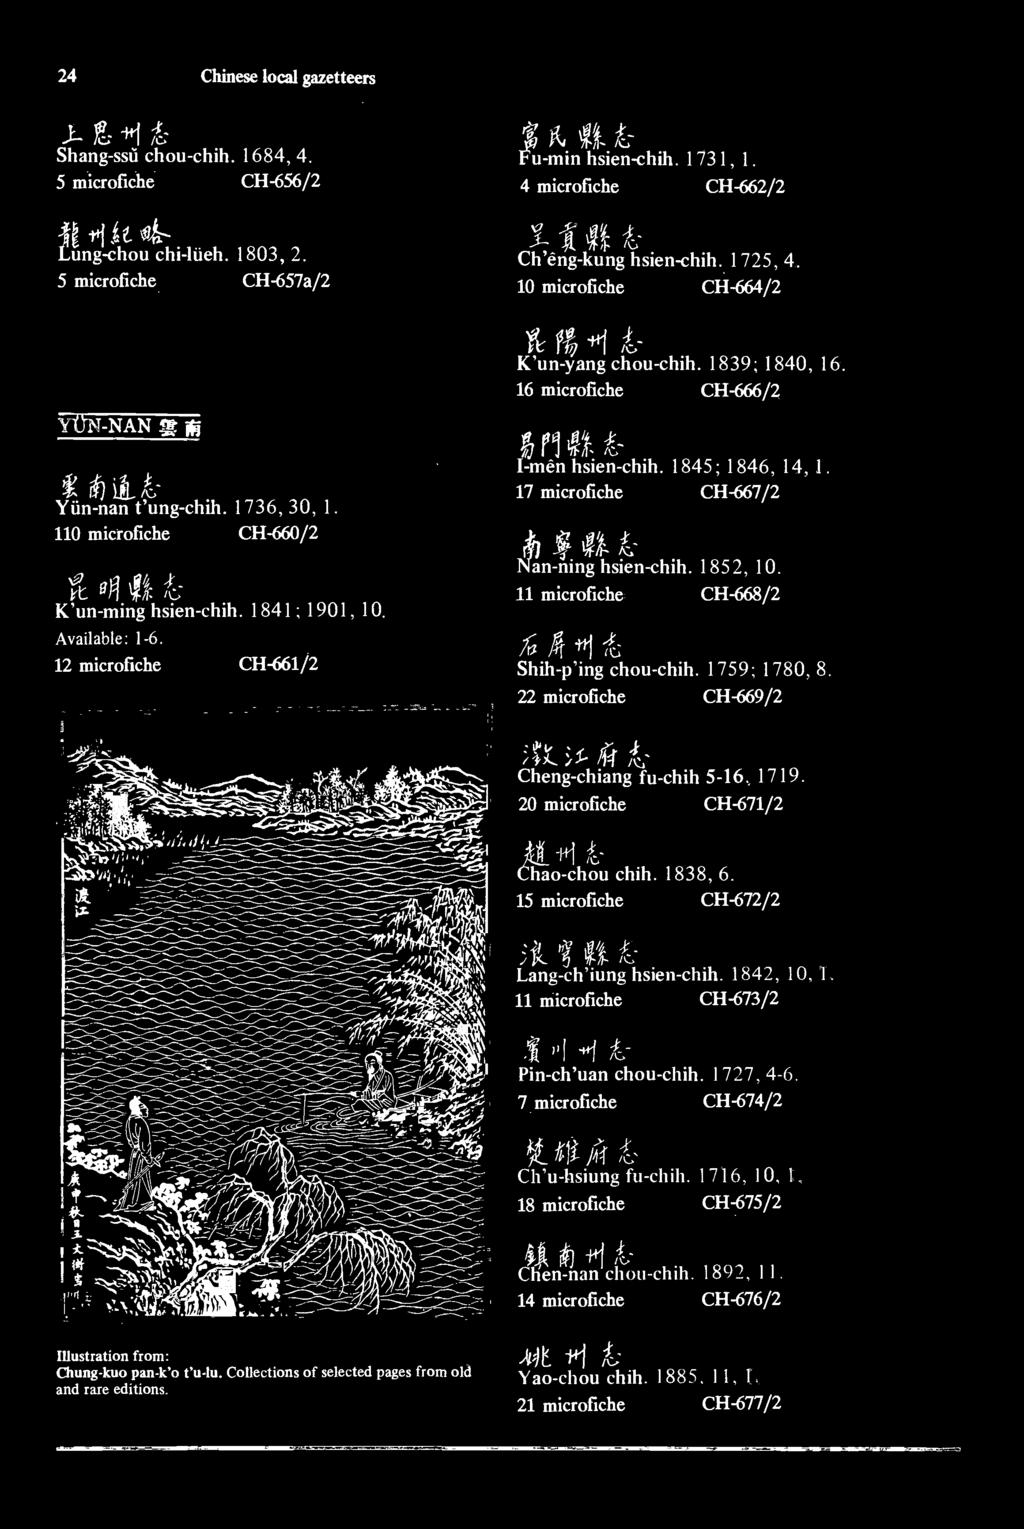 ^- all > Ch'éng-kung Ch'eng-kung hsien-chih. 1725,4. 10 microfiche CH-664/2 'em '- fc ft *1 i' K'un-yang chou-chih. 1839; 1840, 16. 16 microfiche CH-666/2 i~ k, F1 I-men hsien-chih. 1845; 1846, 14, 1.